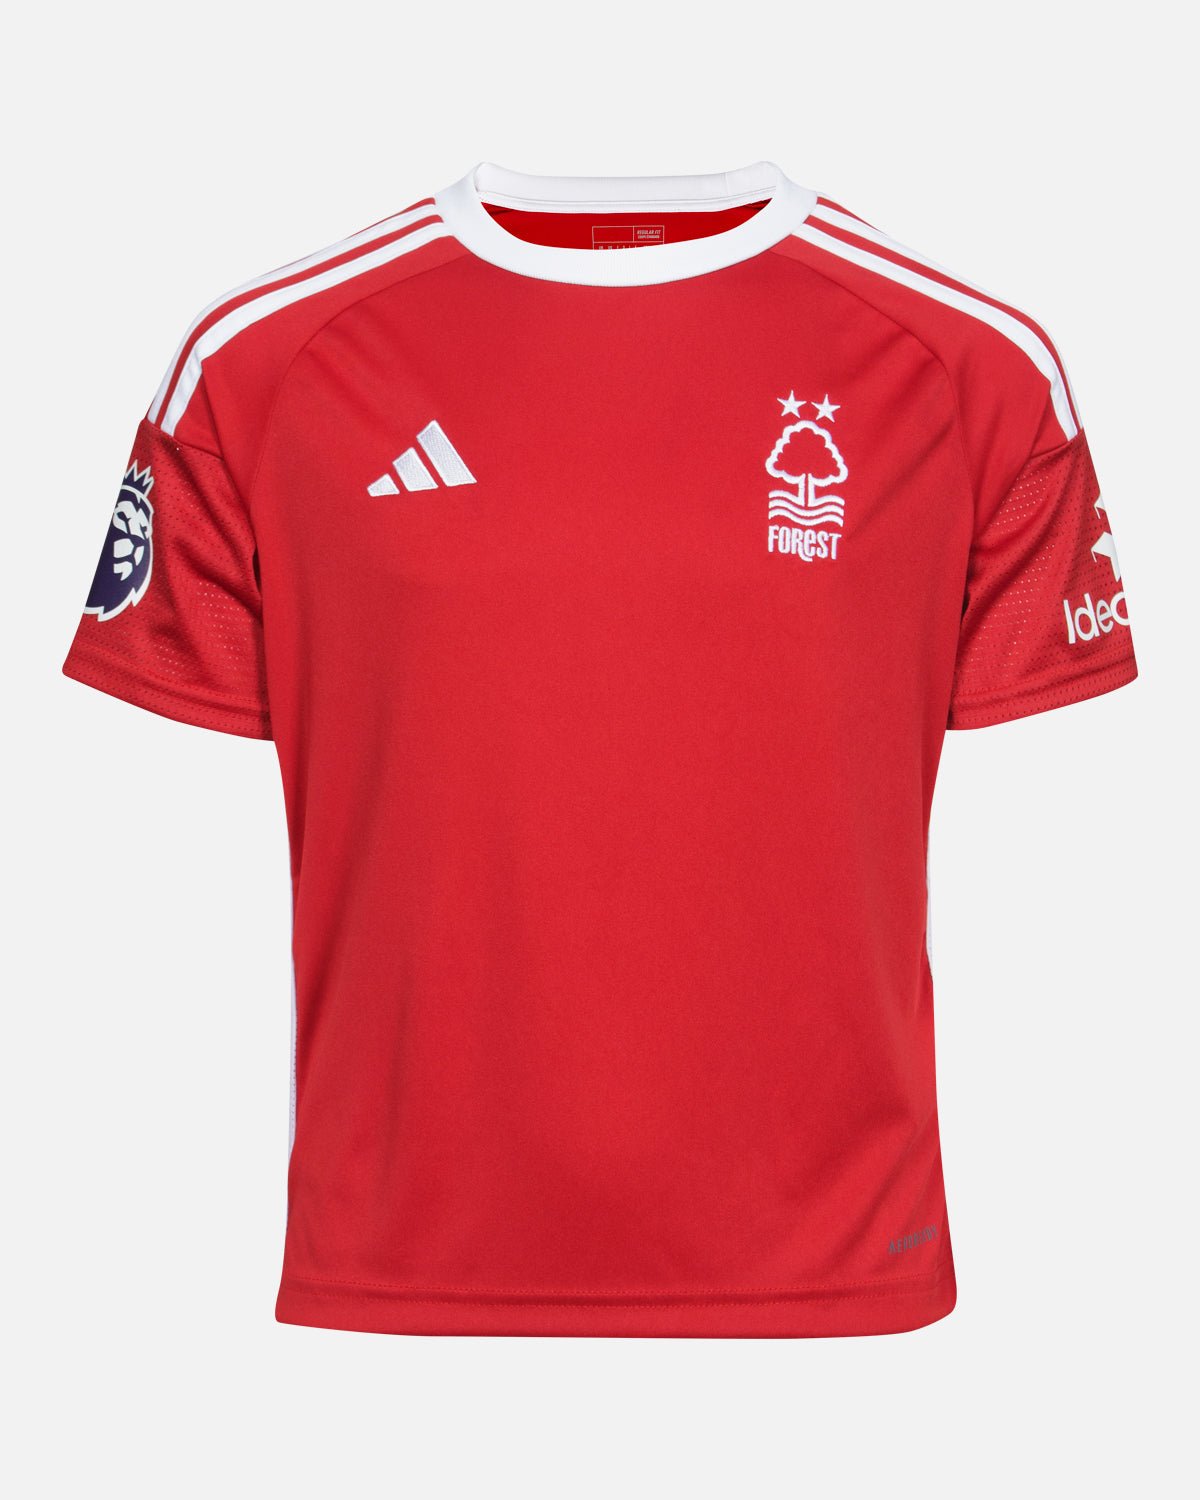 NFFC Junior Home Shirt 23-24 - Aina 43 - Nottingham Forest FC